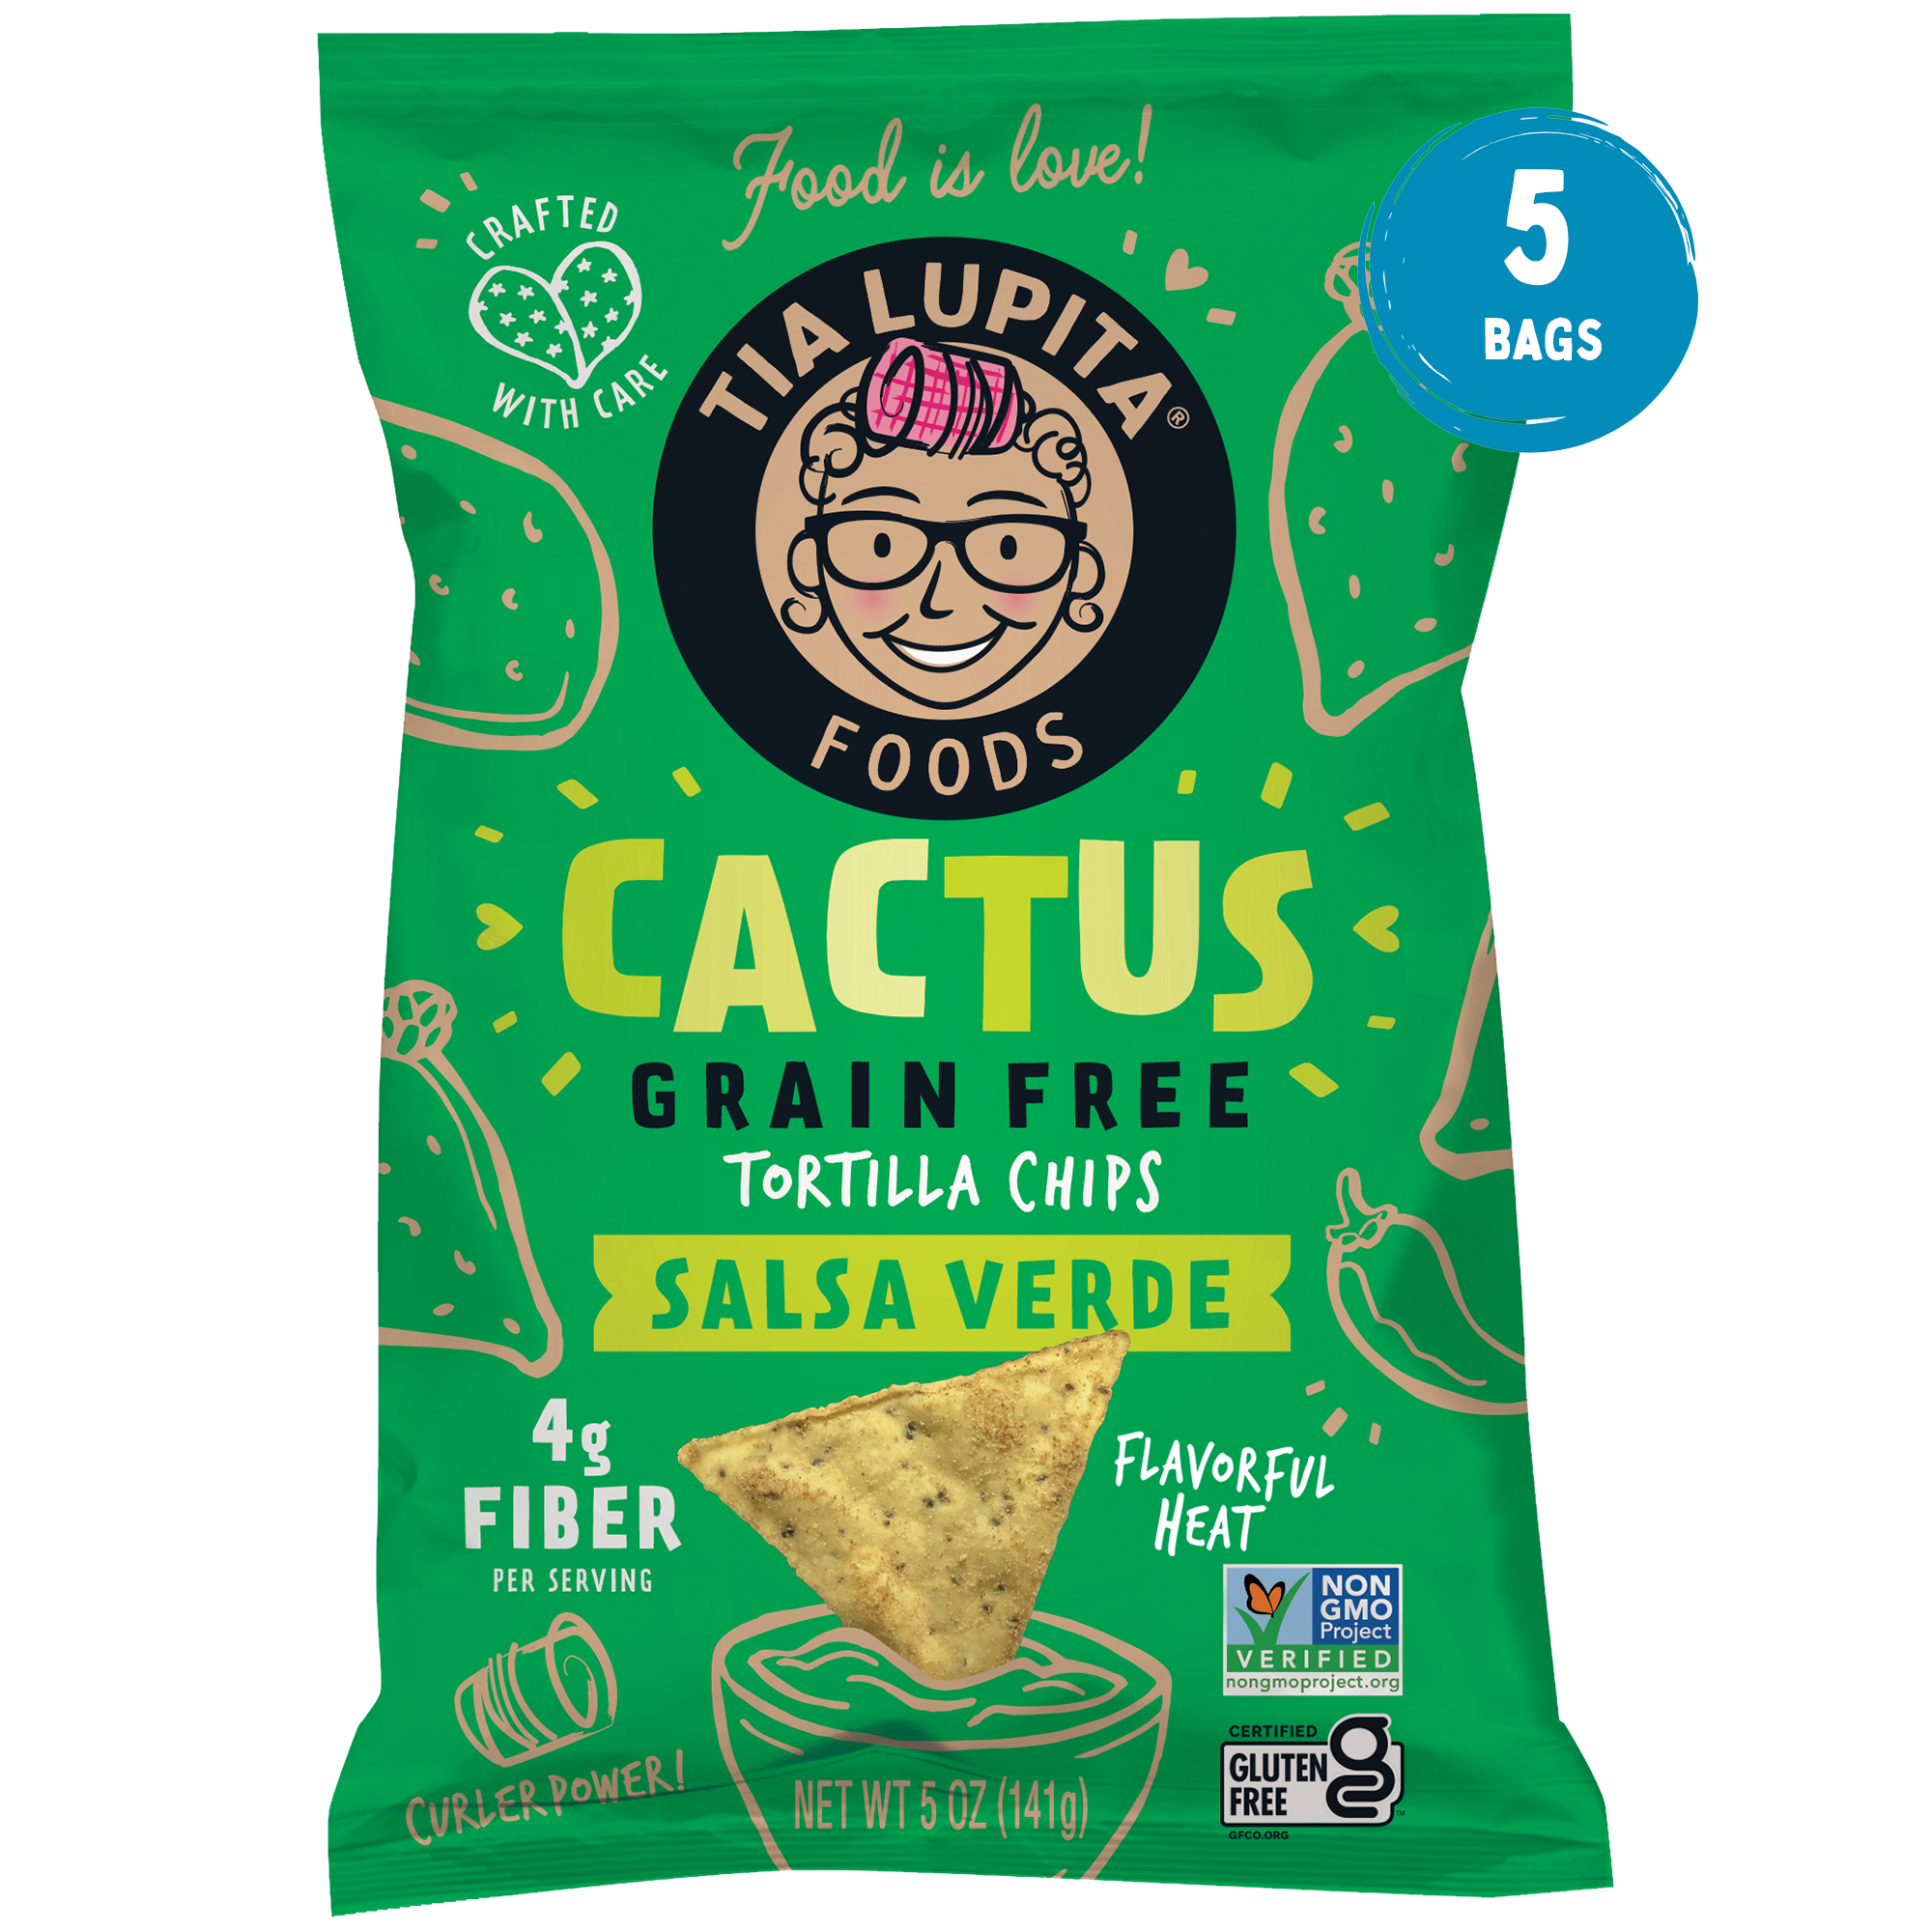 Salsa Verde Grain Free Cactus Chips